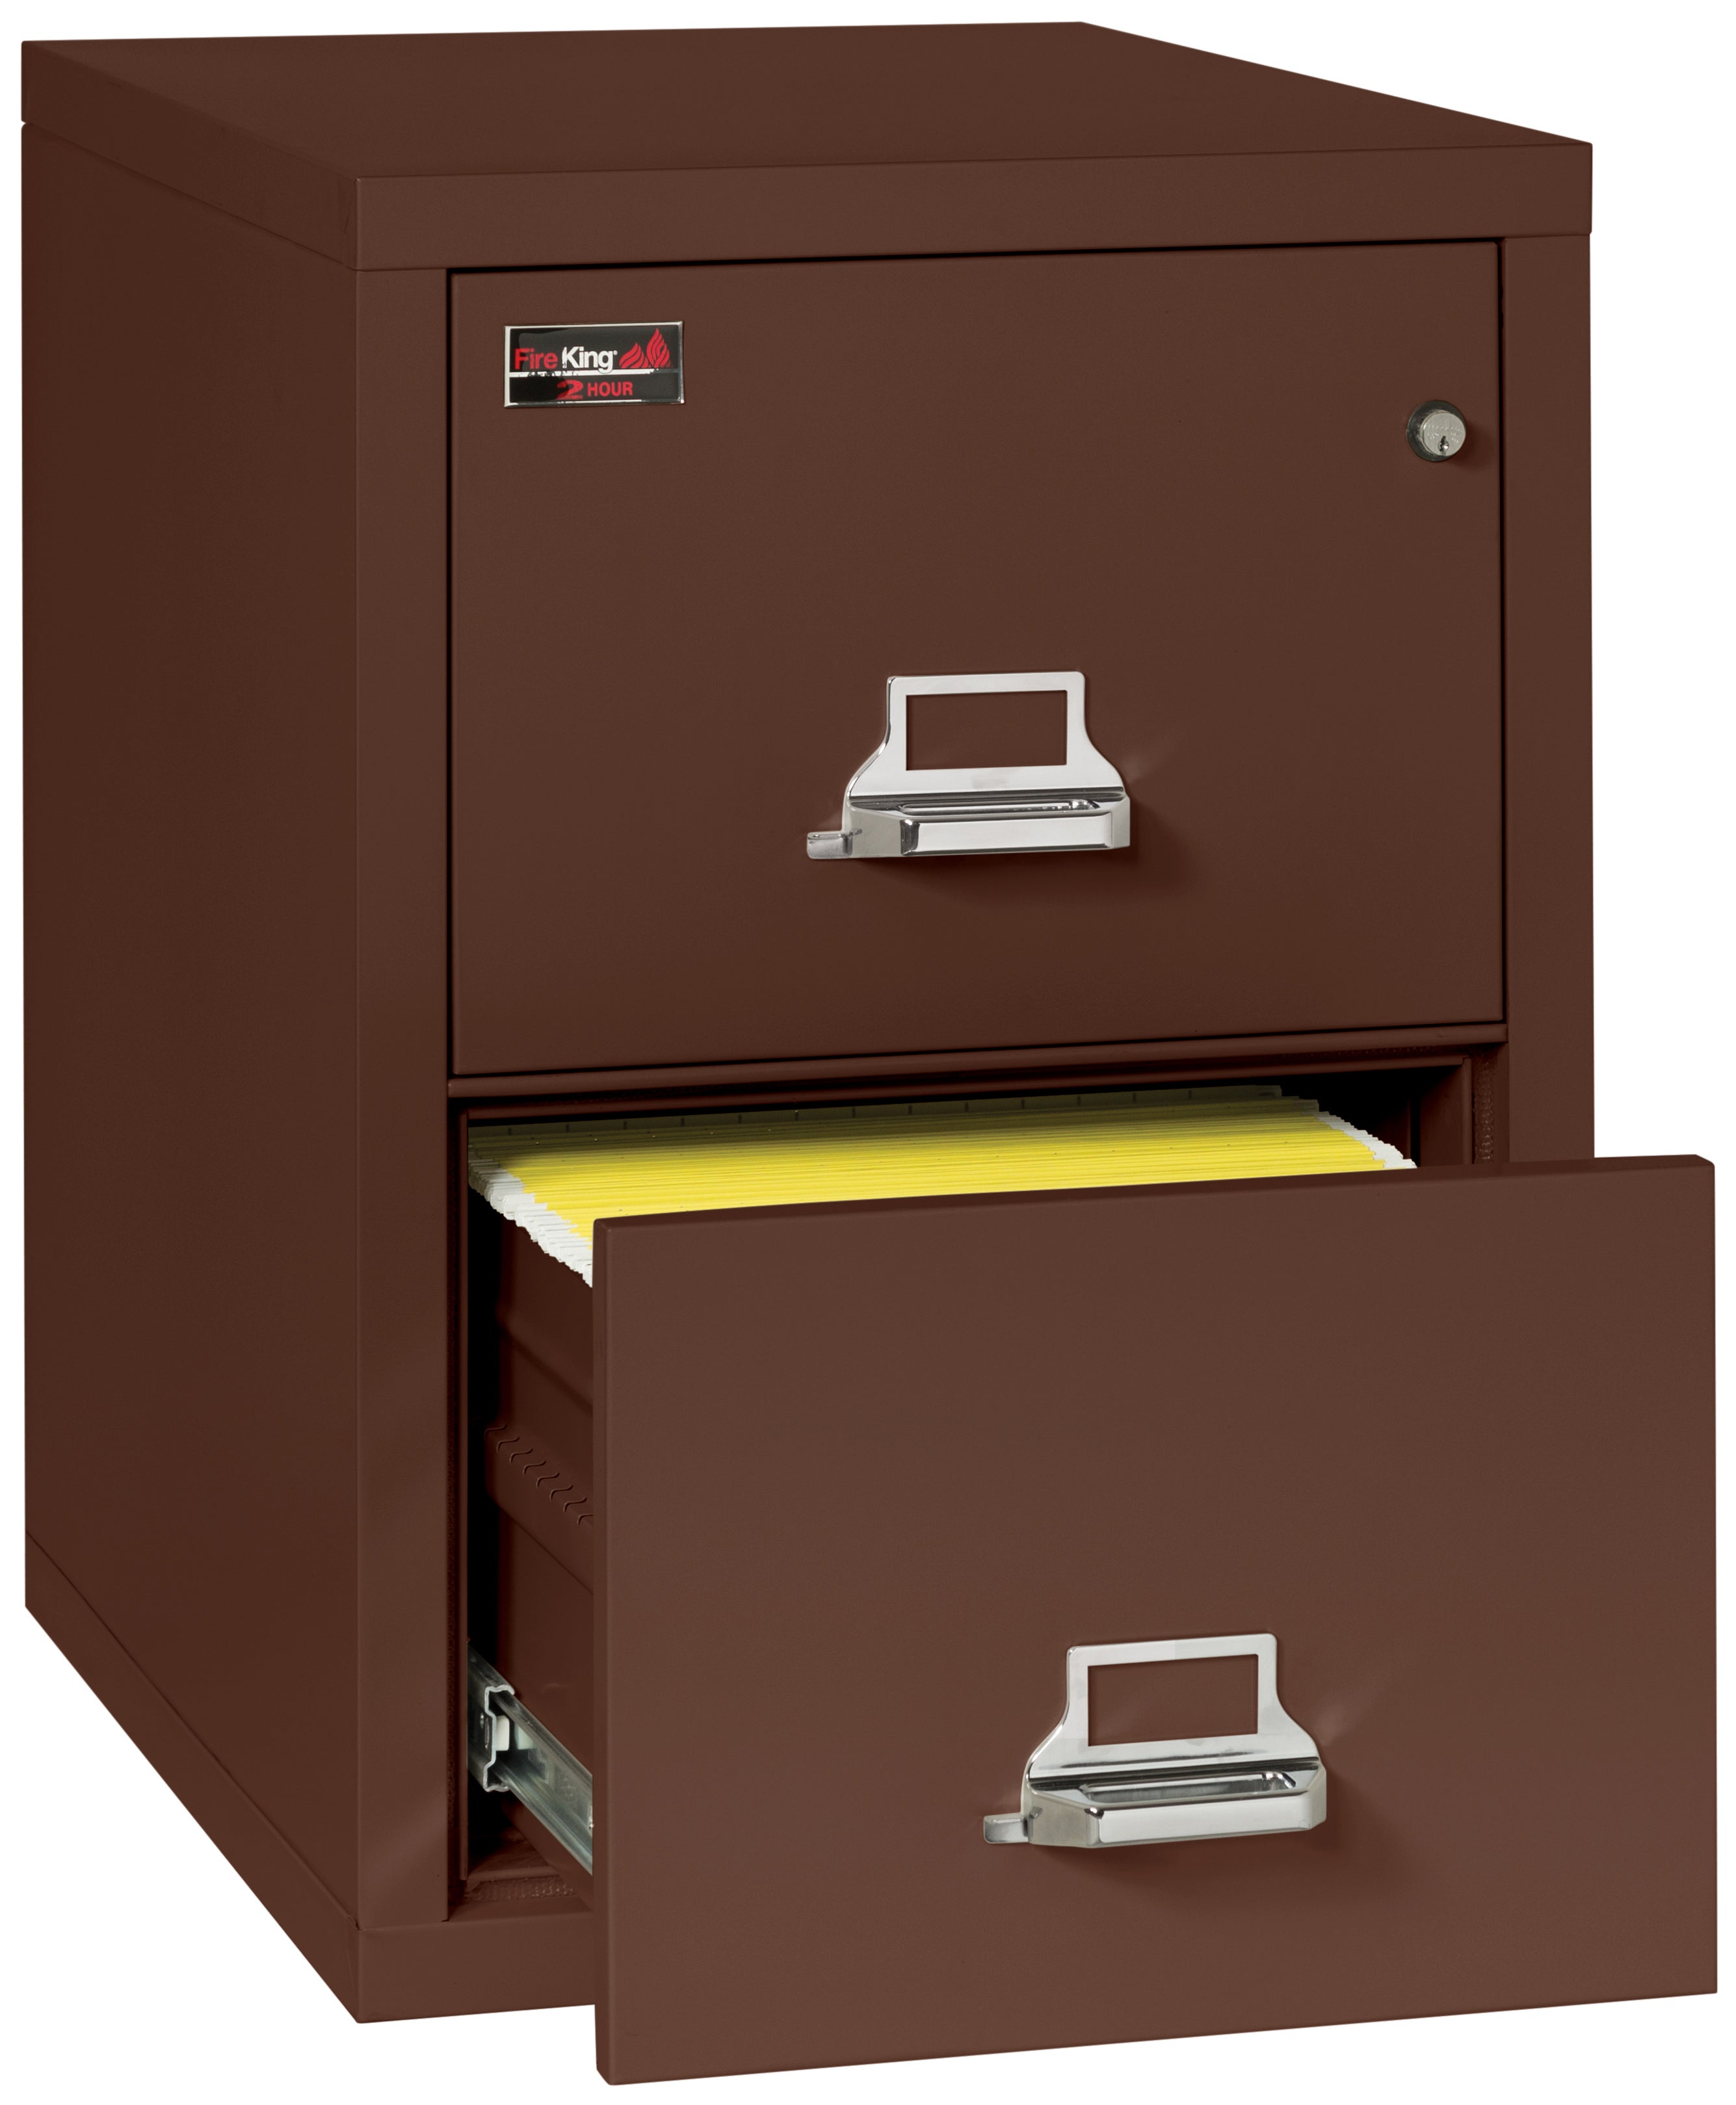 2 Hour Fire Resistant File Cabinet - 2 Drawer Letter 31" depth